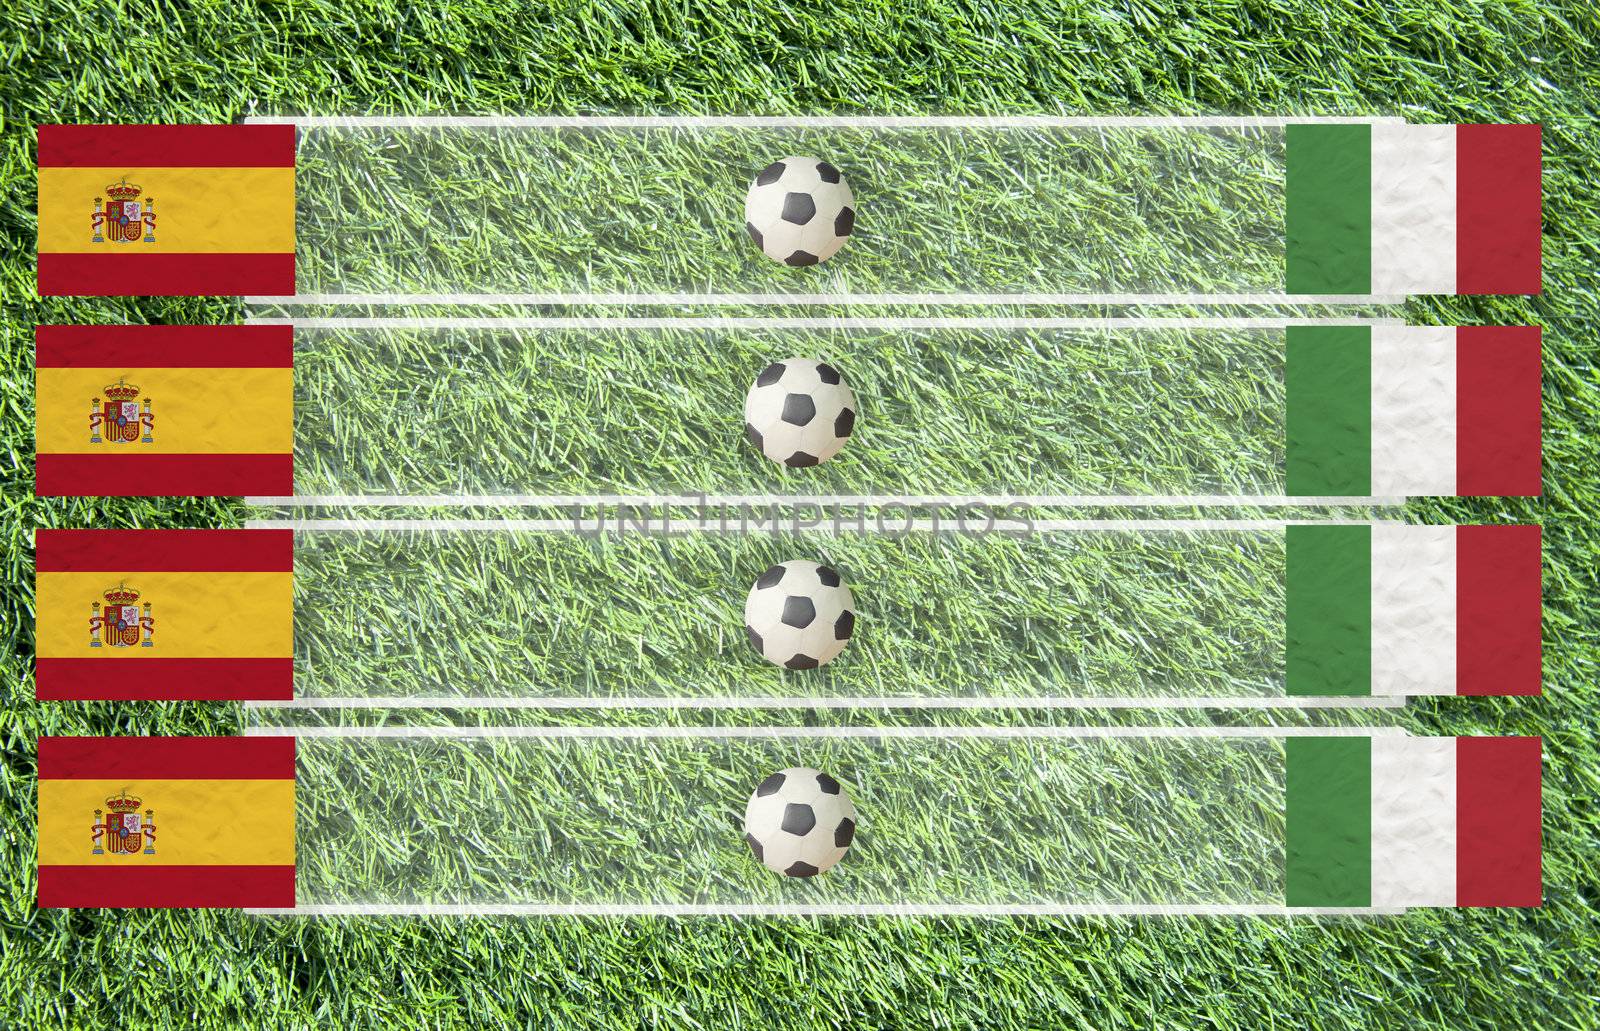 Plasticine Football flag on grass background for score (Group C)